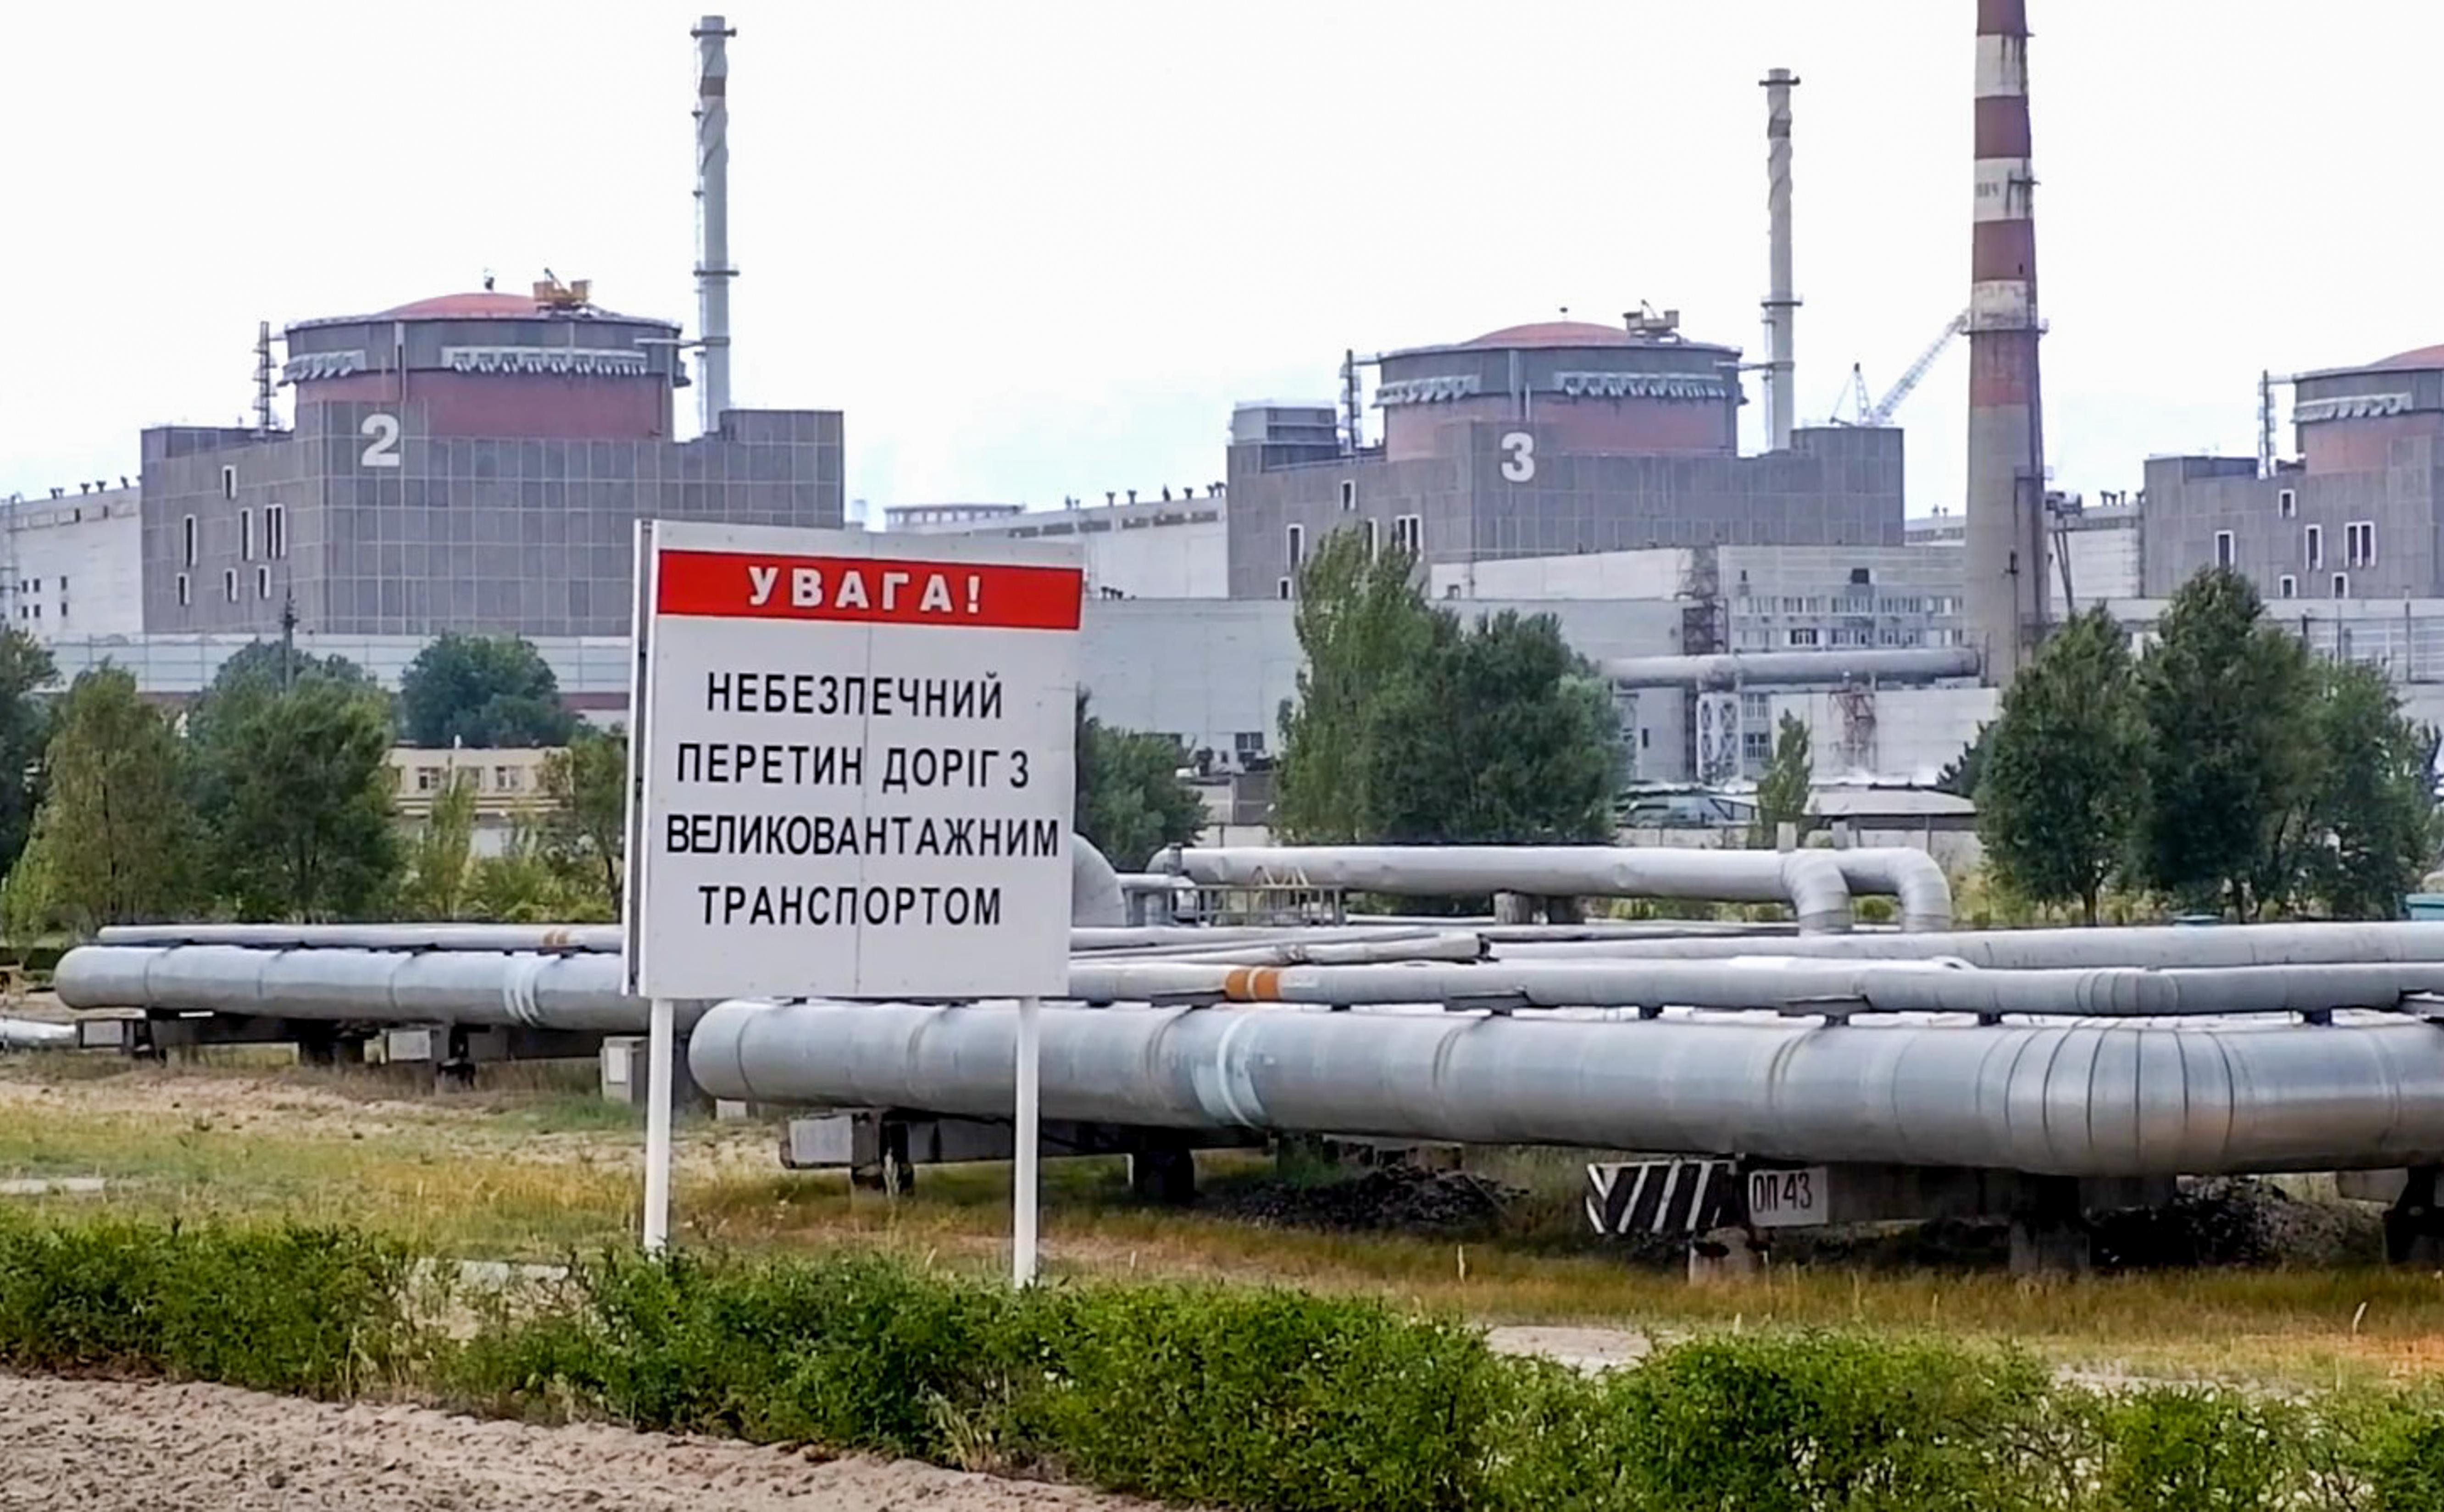 Запорожская ВГА разработала план эвакуации на случай аварии на АЭС"/>













